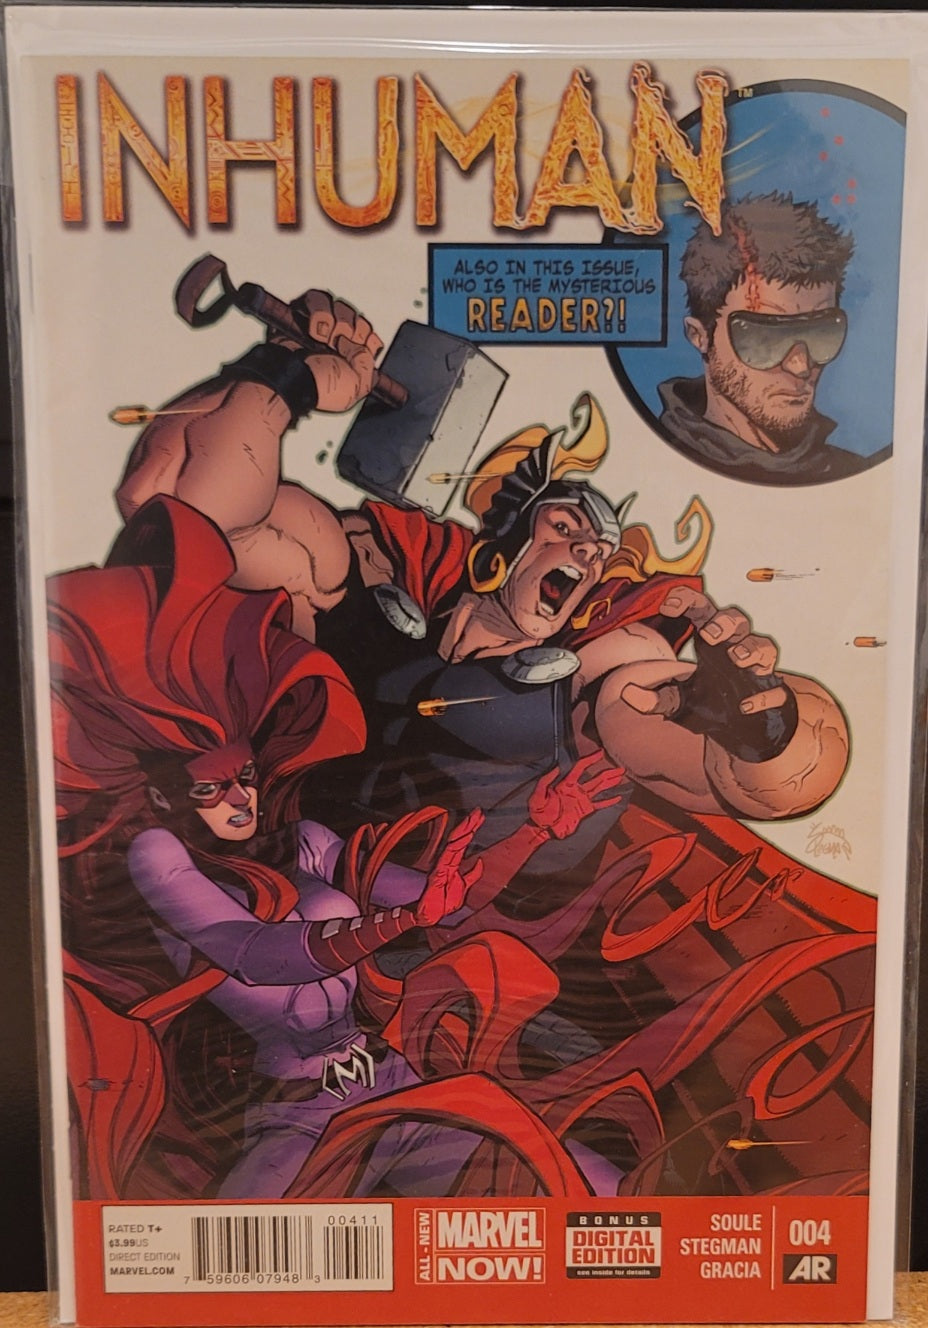 Inhuman: Marvel Now Thor Digital Edition Issue 4